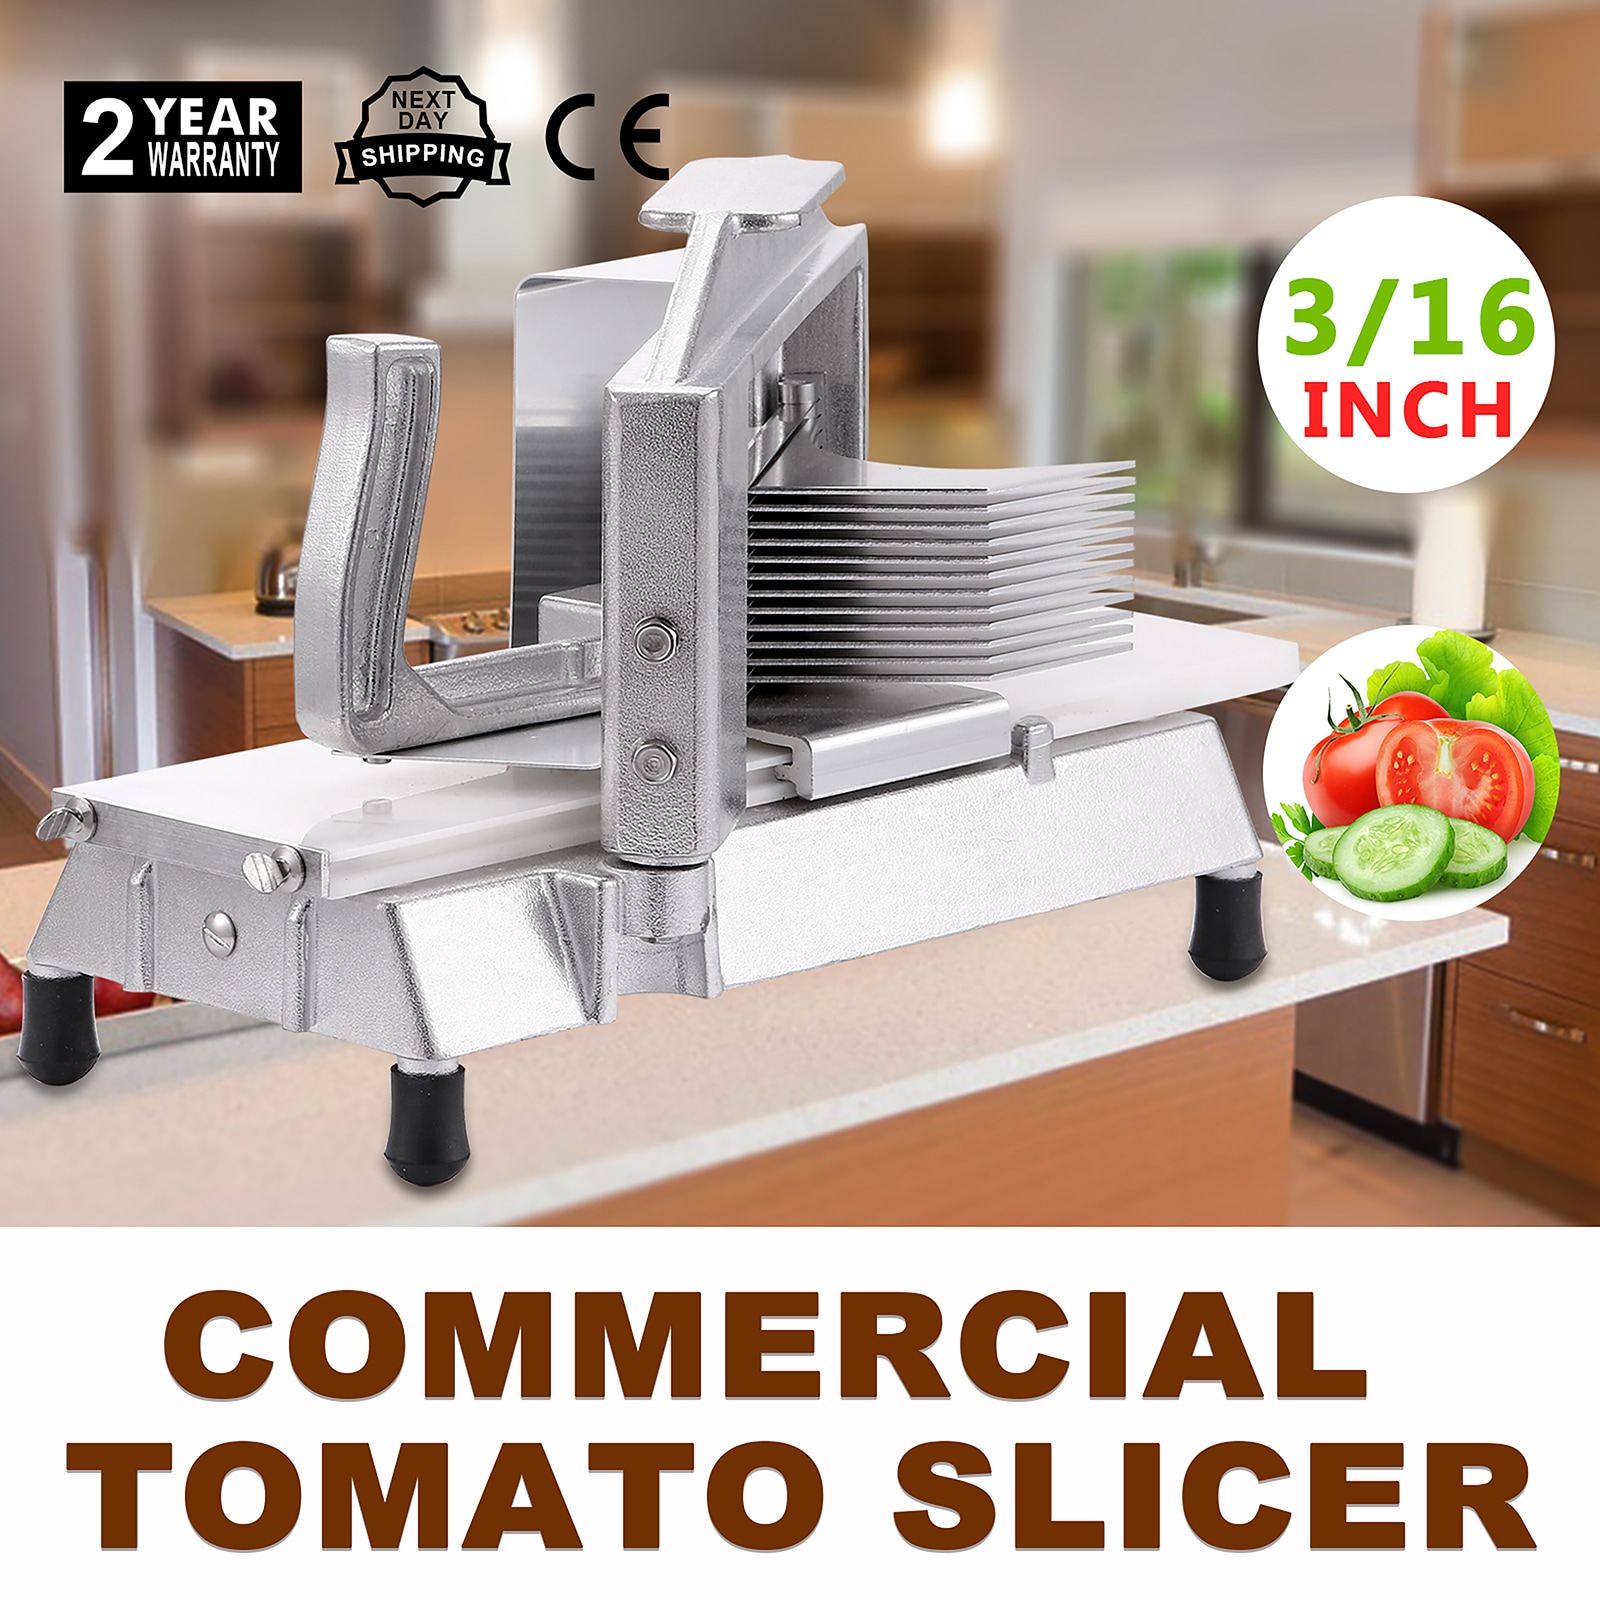 VEVOR Commercial Tomato Slicer 3/16 inch Heavy Duty Tomato Slicer